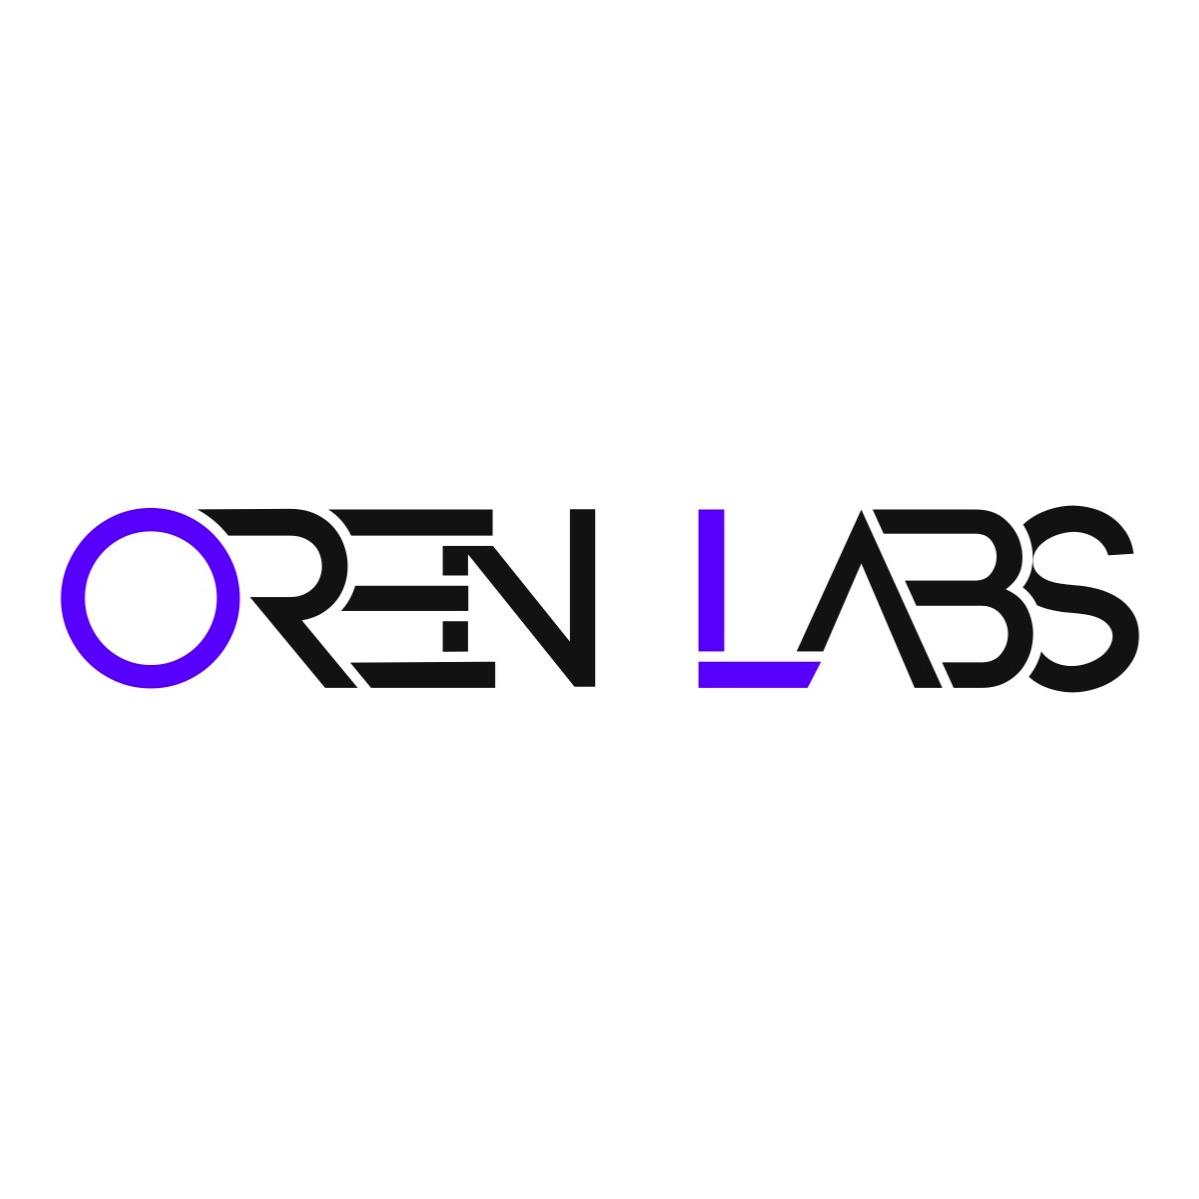 Oren Labs